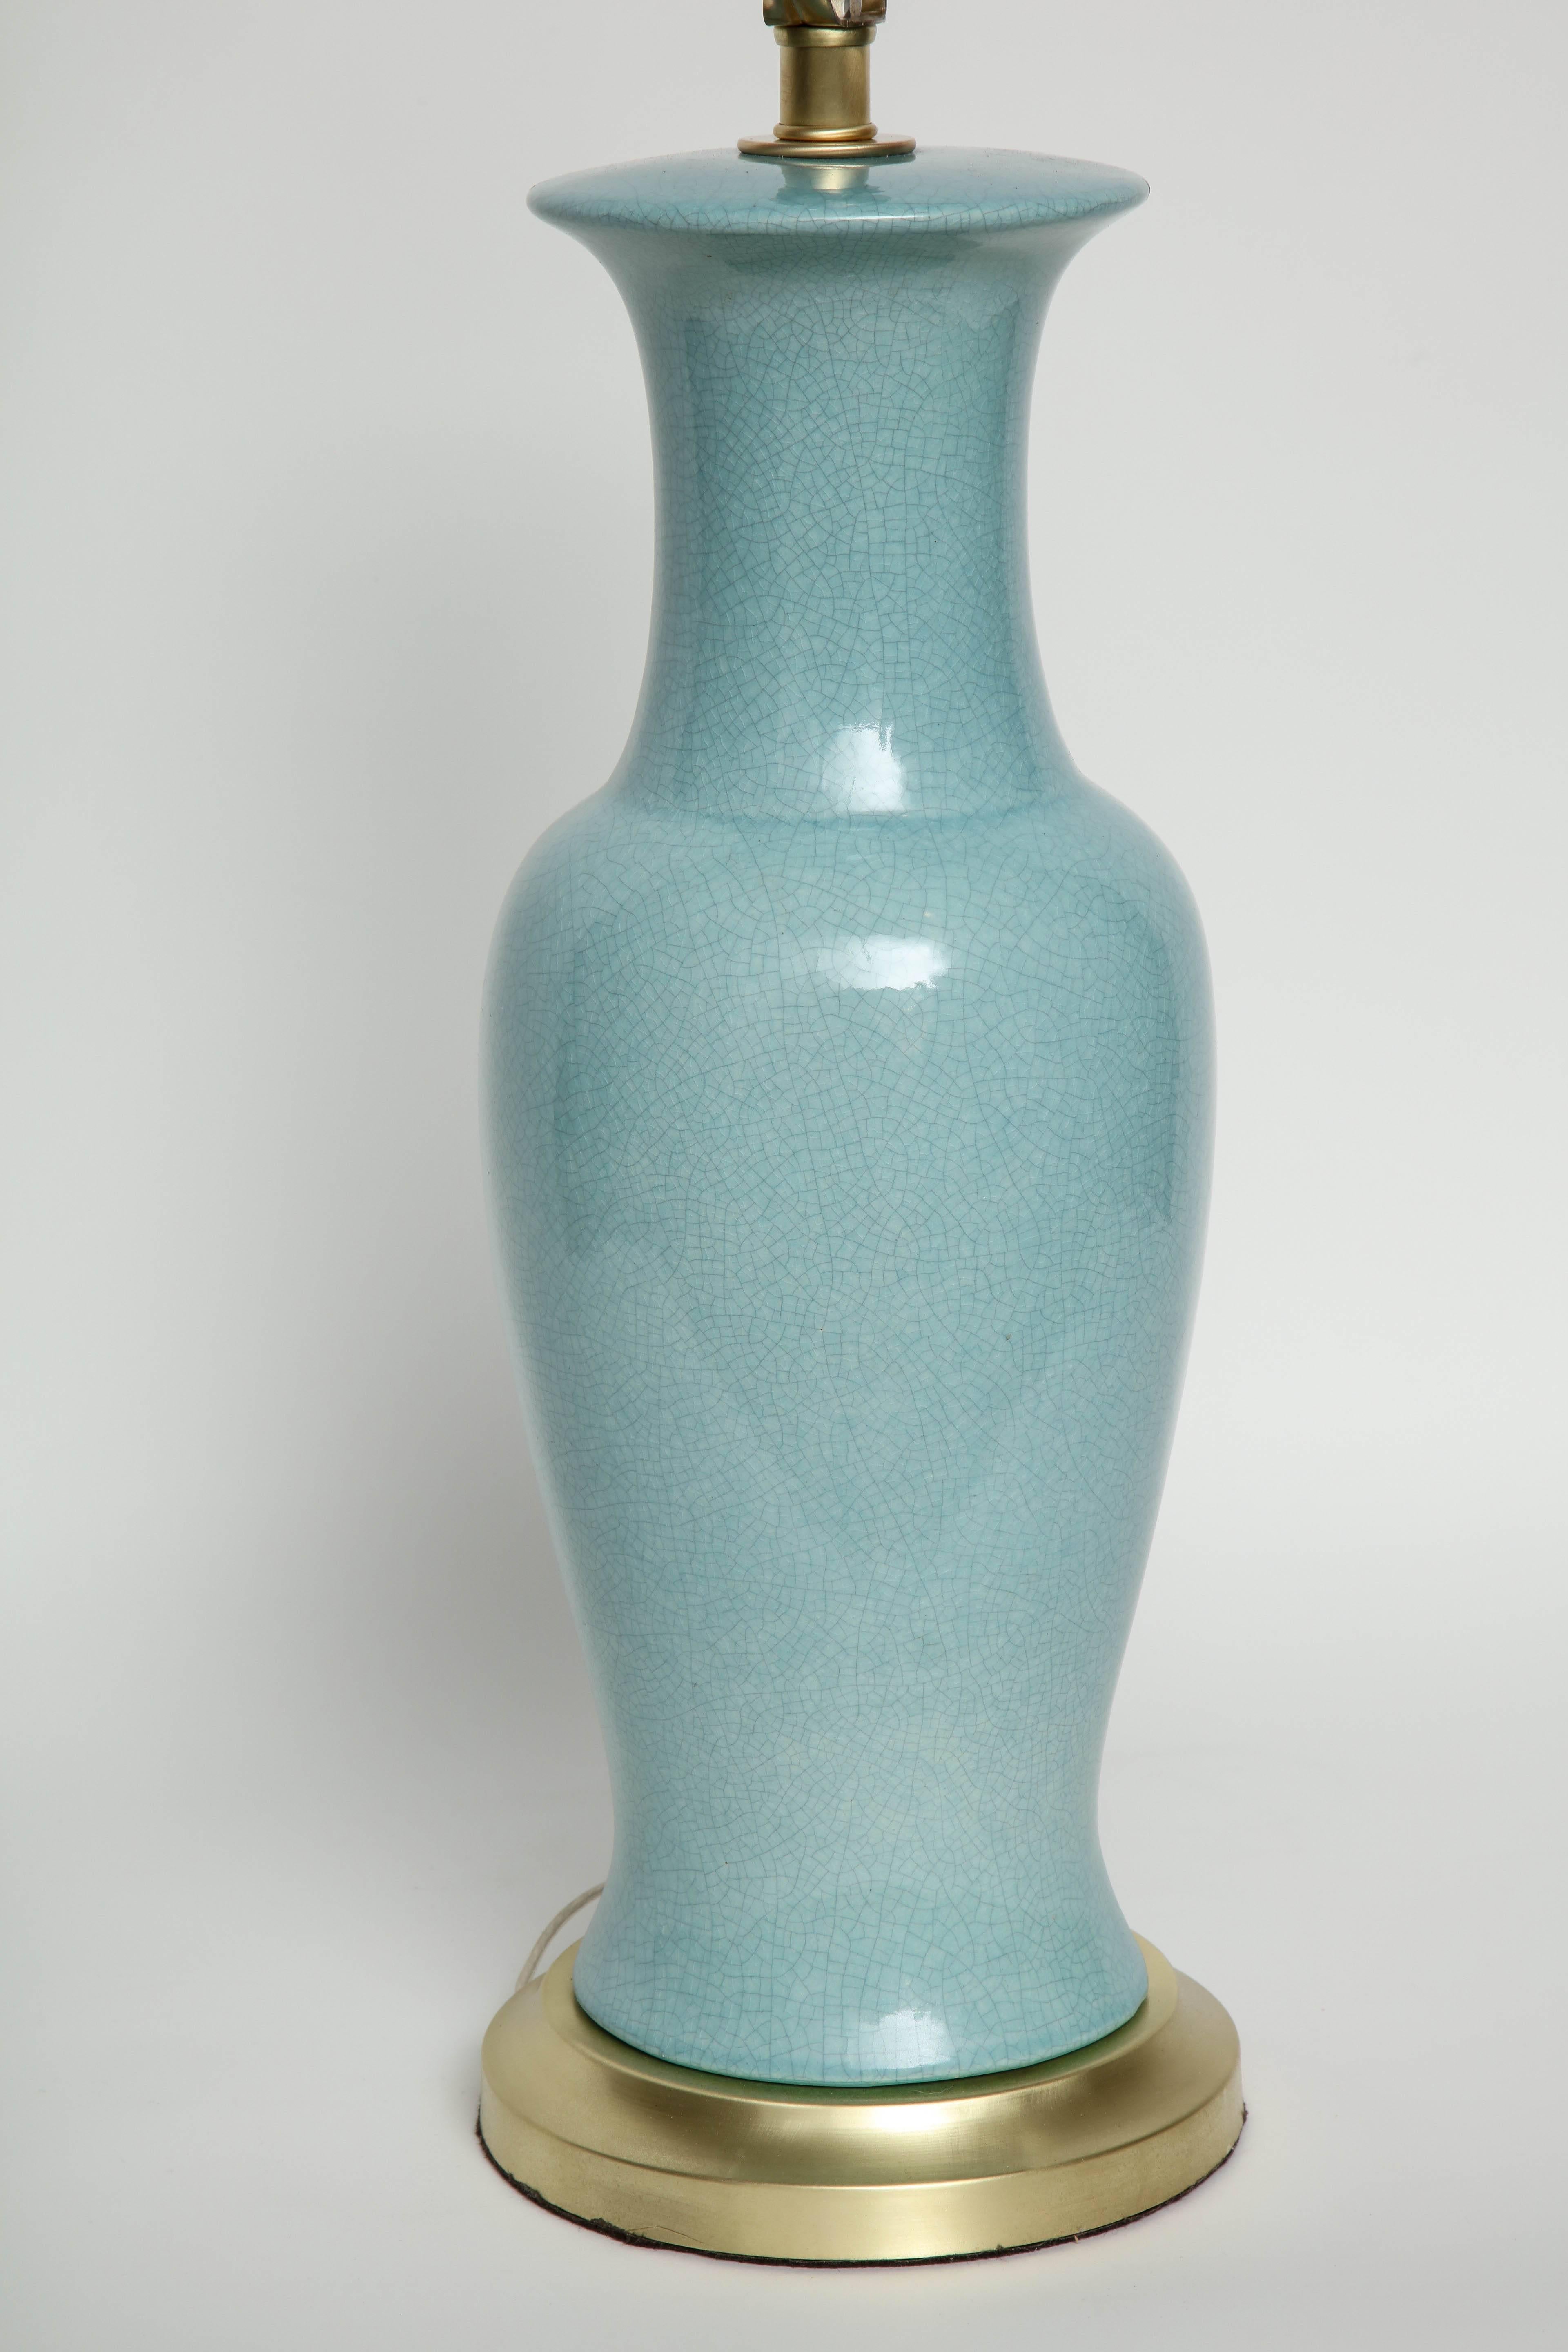 Brass Paul Hanson Robins Egg Blue Porcelain Lamps